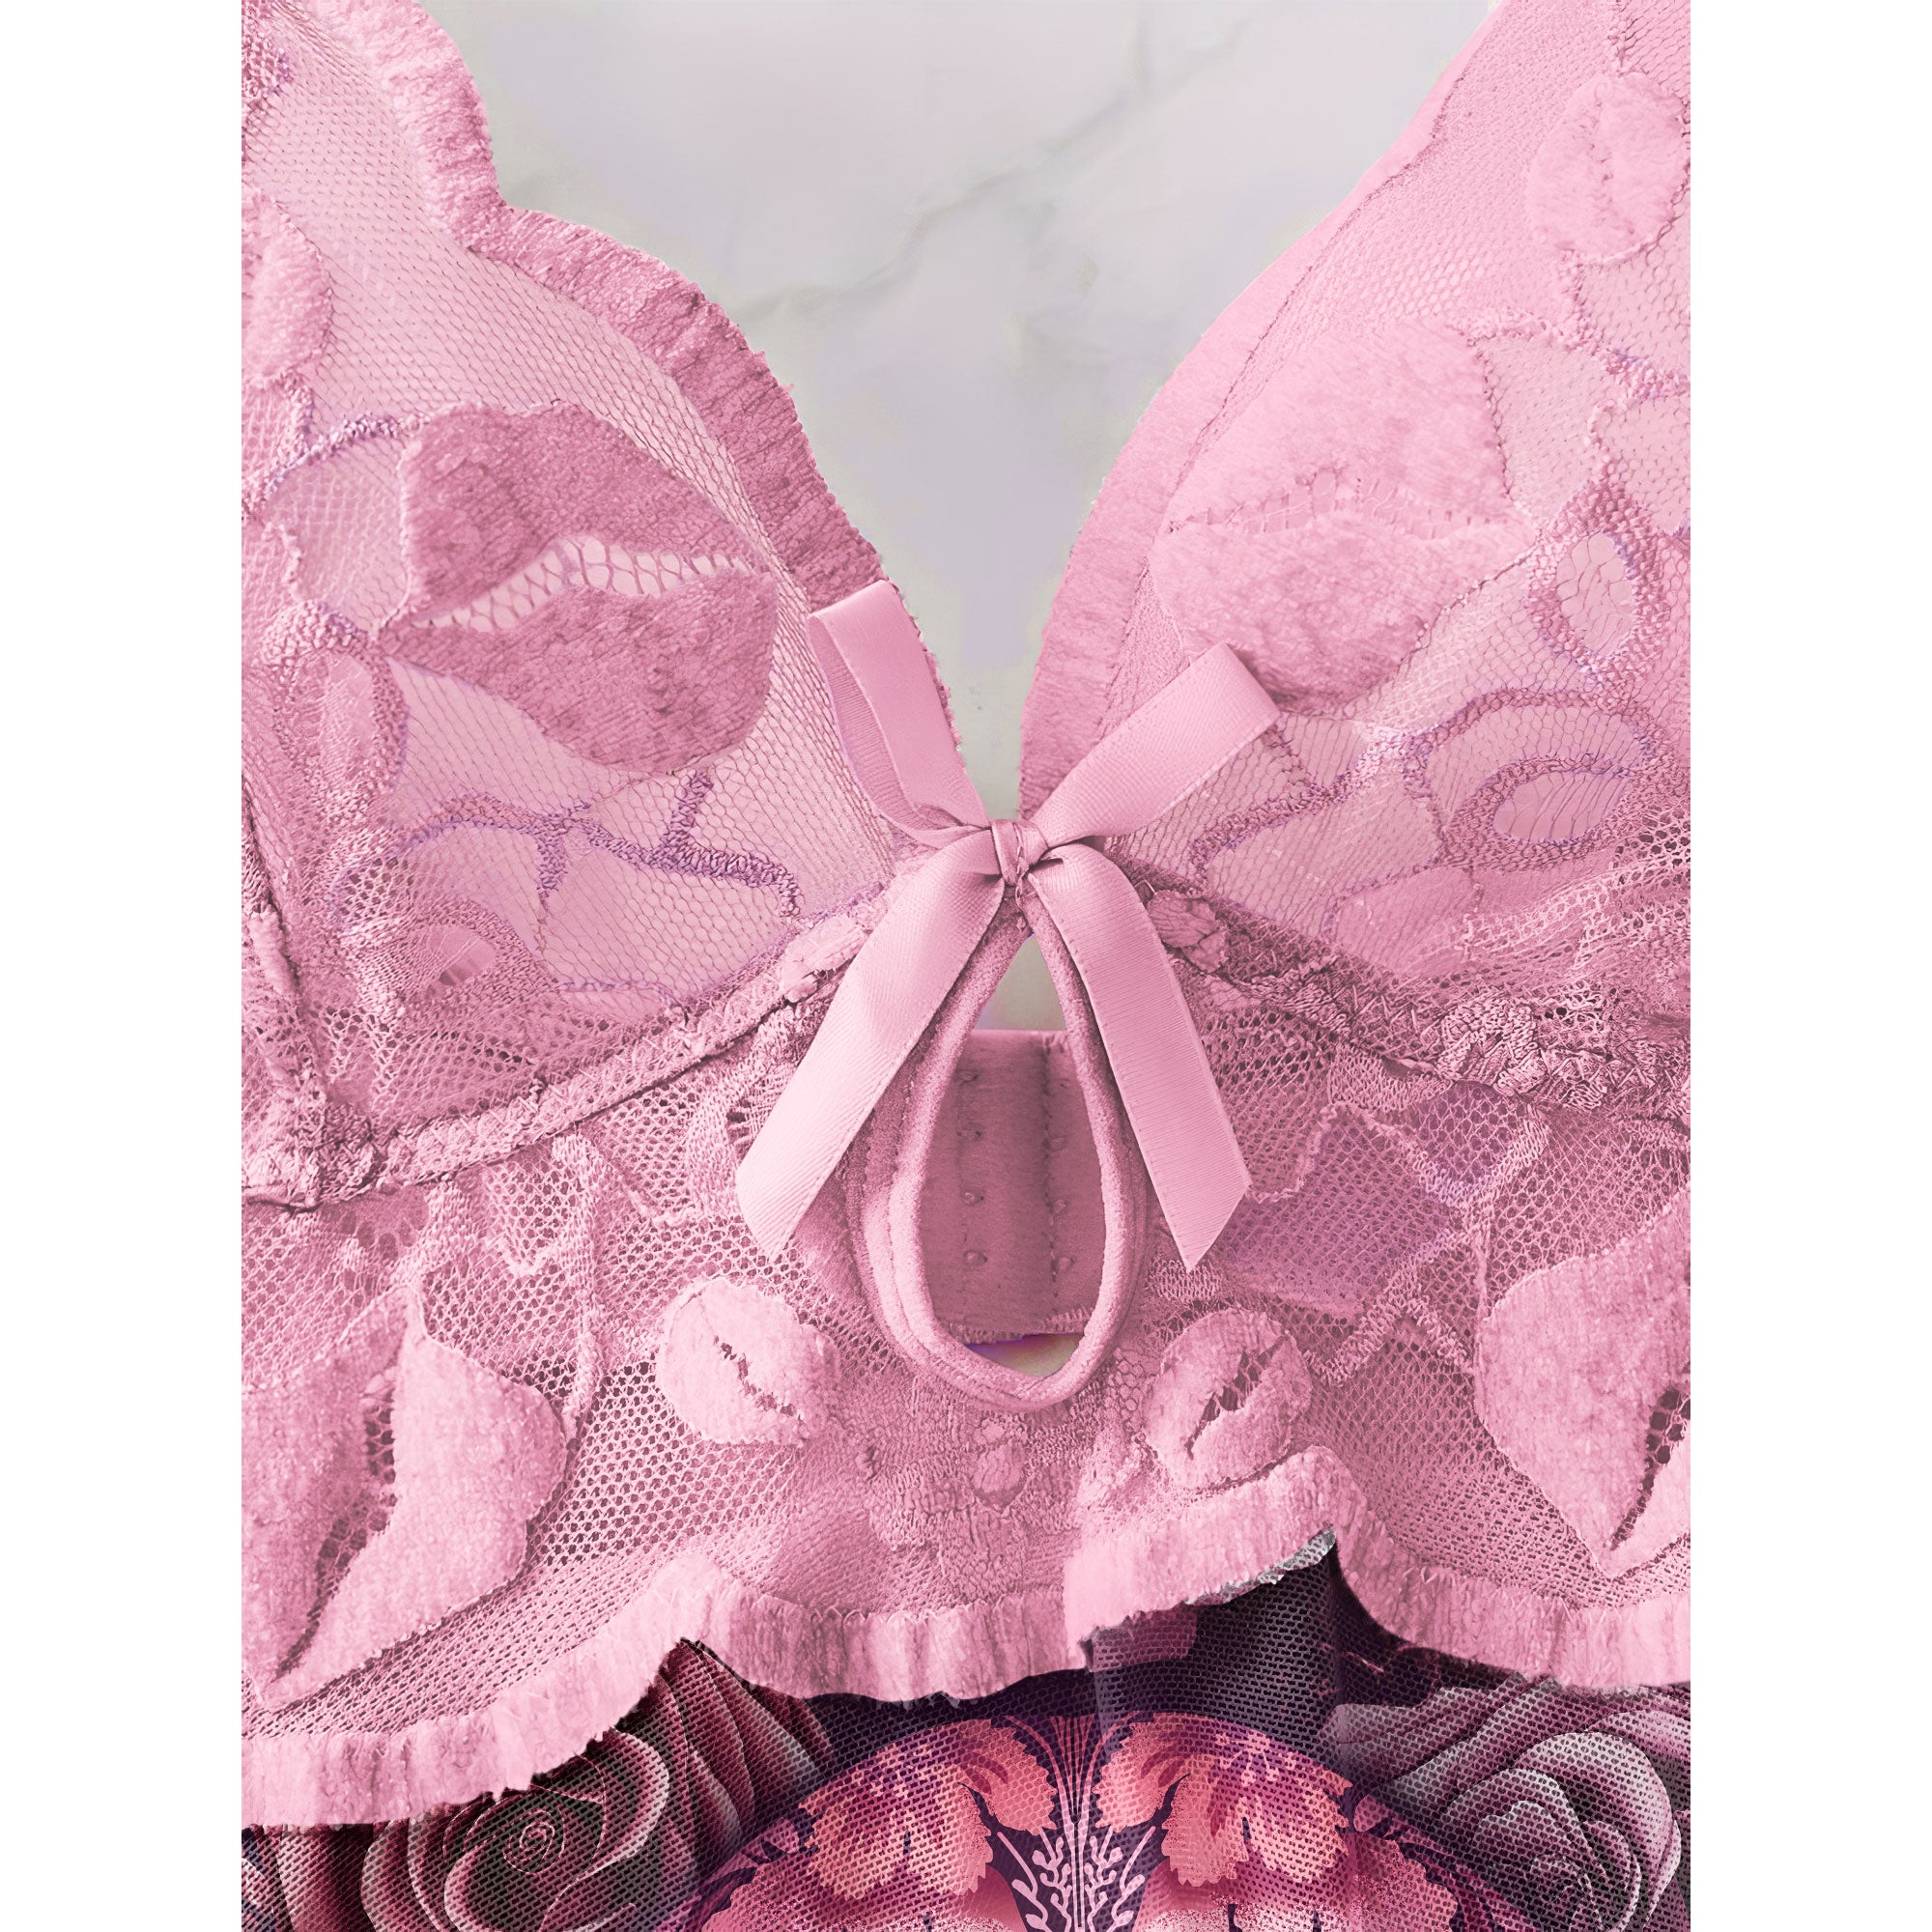 New Women's Baby Pink Naughty Lingerie Set, Hot Sexy Lace Bra Panty Set